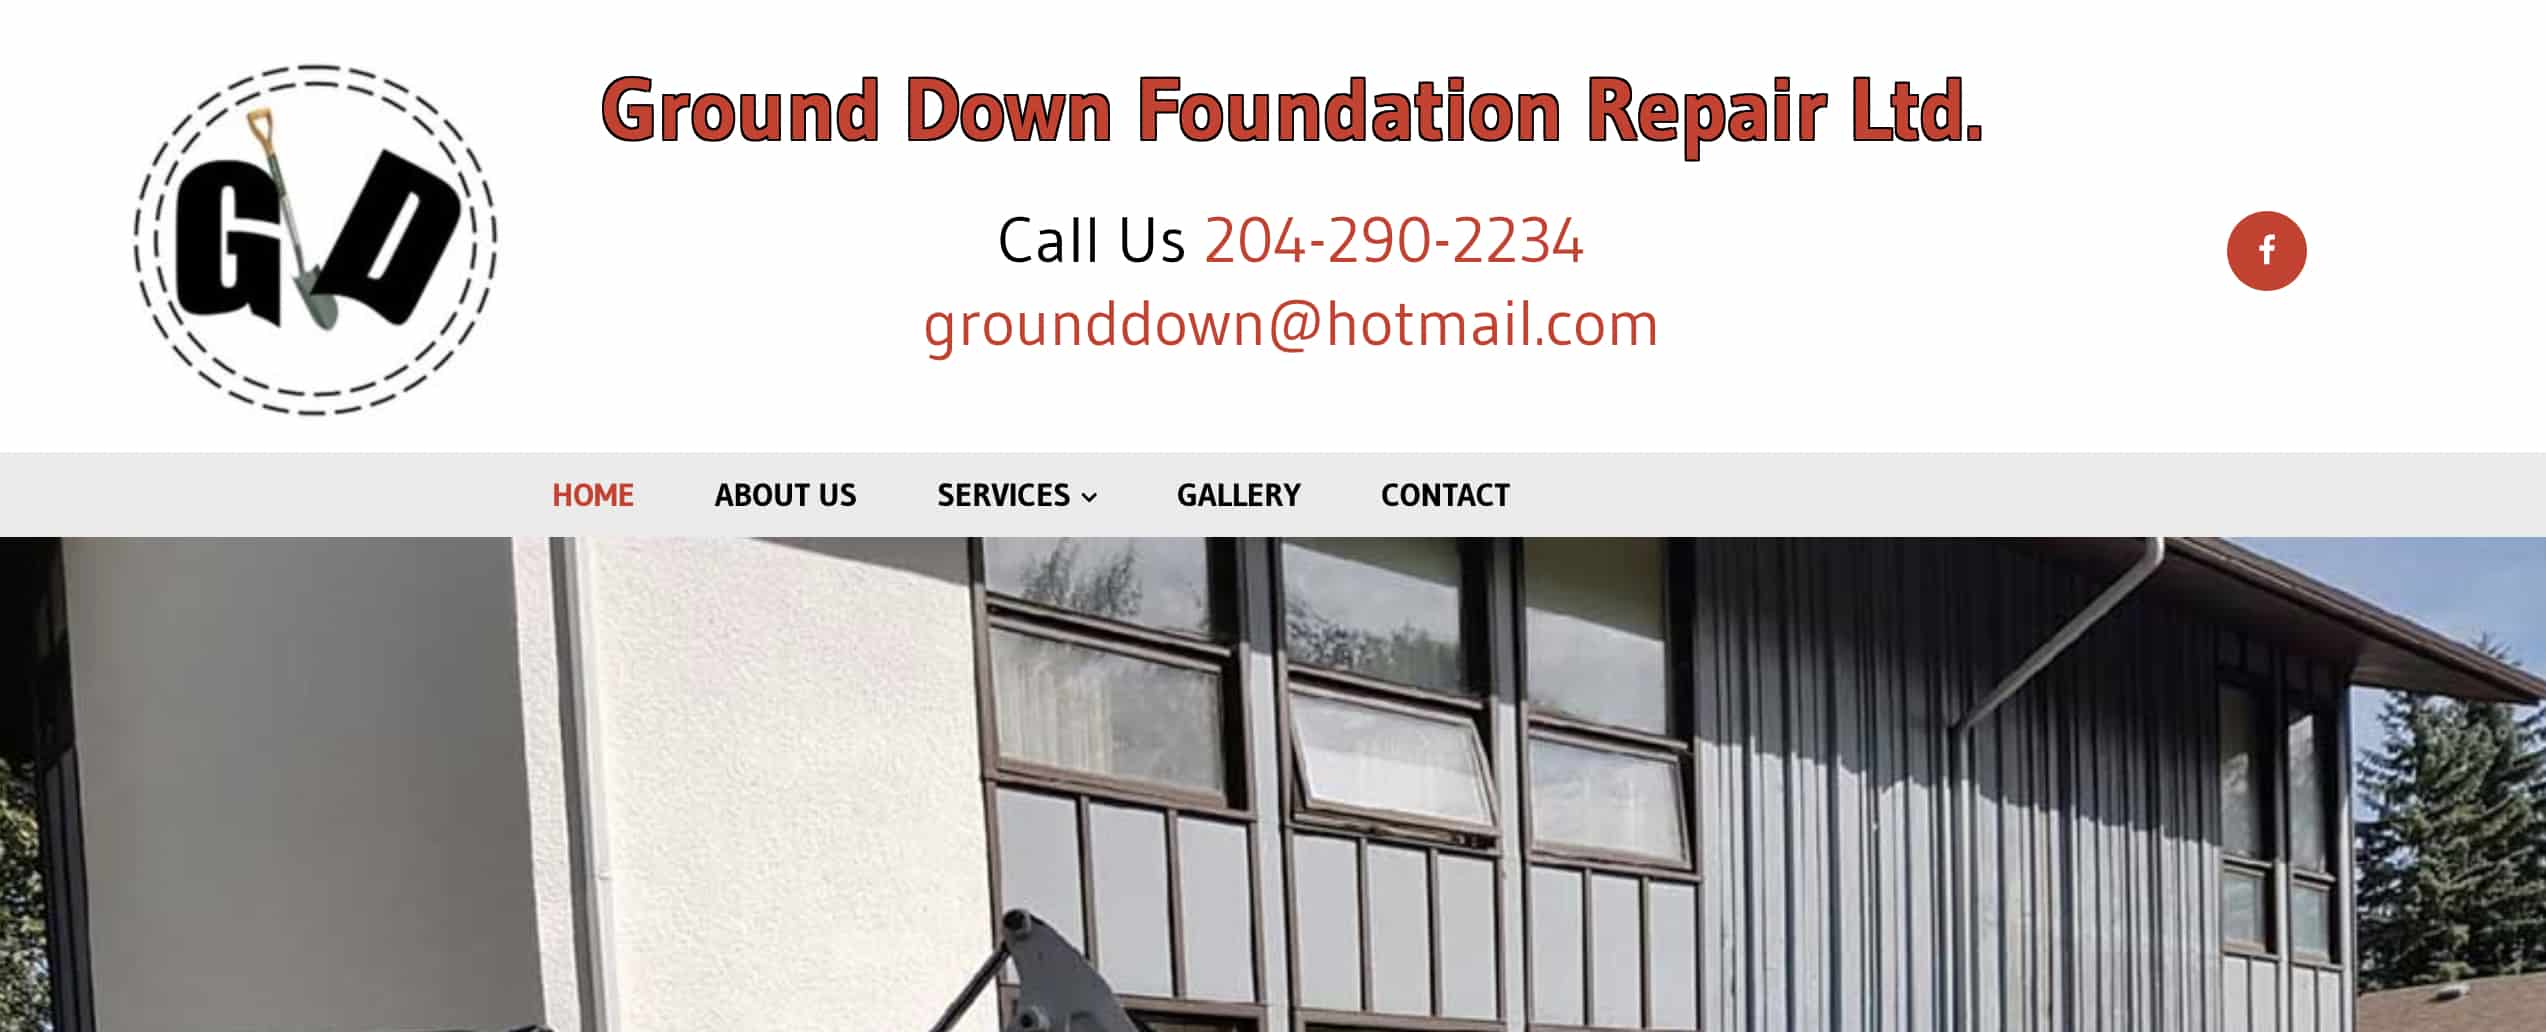 Ground Down Foundation Repair